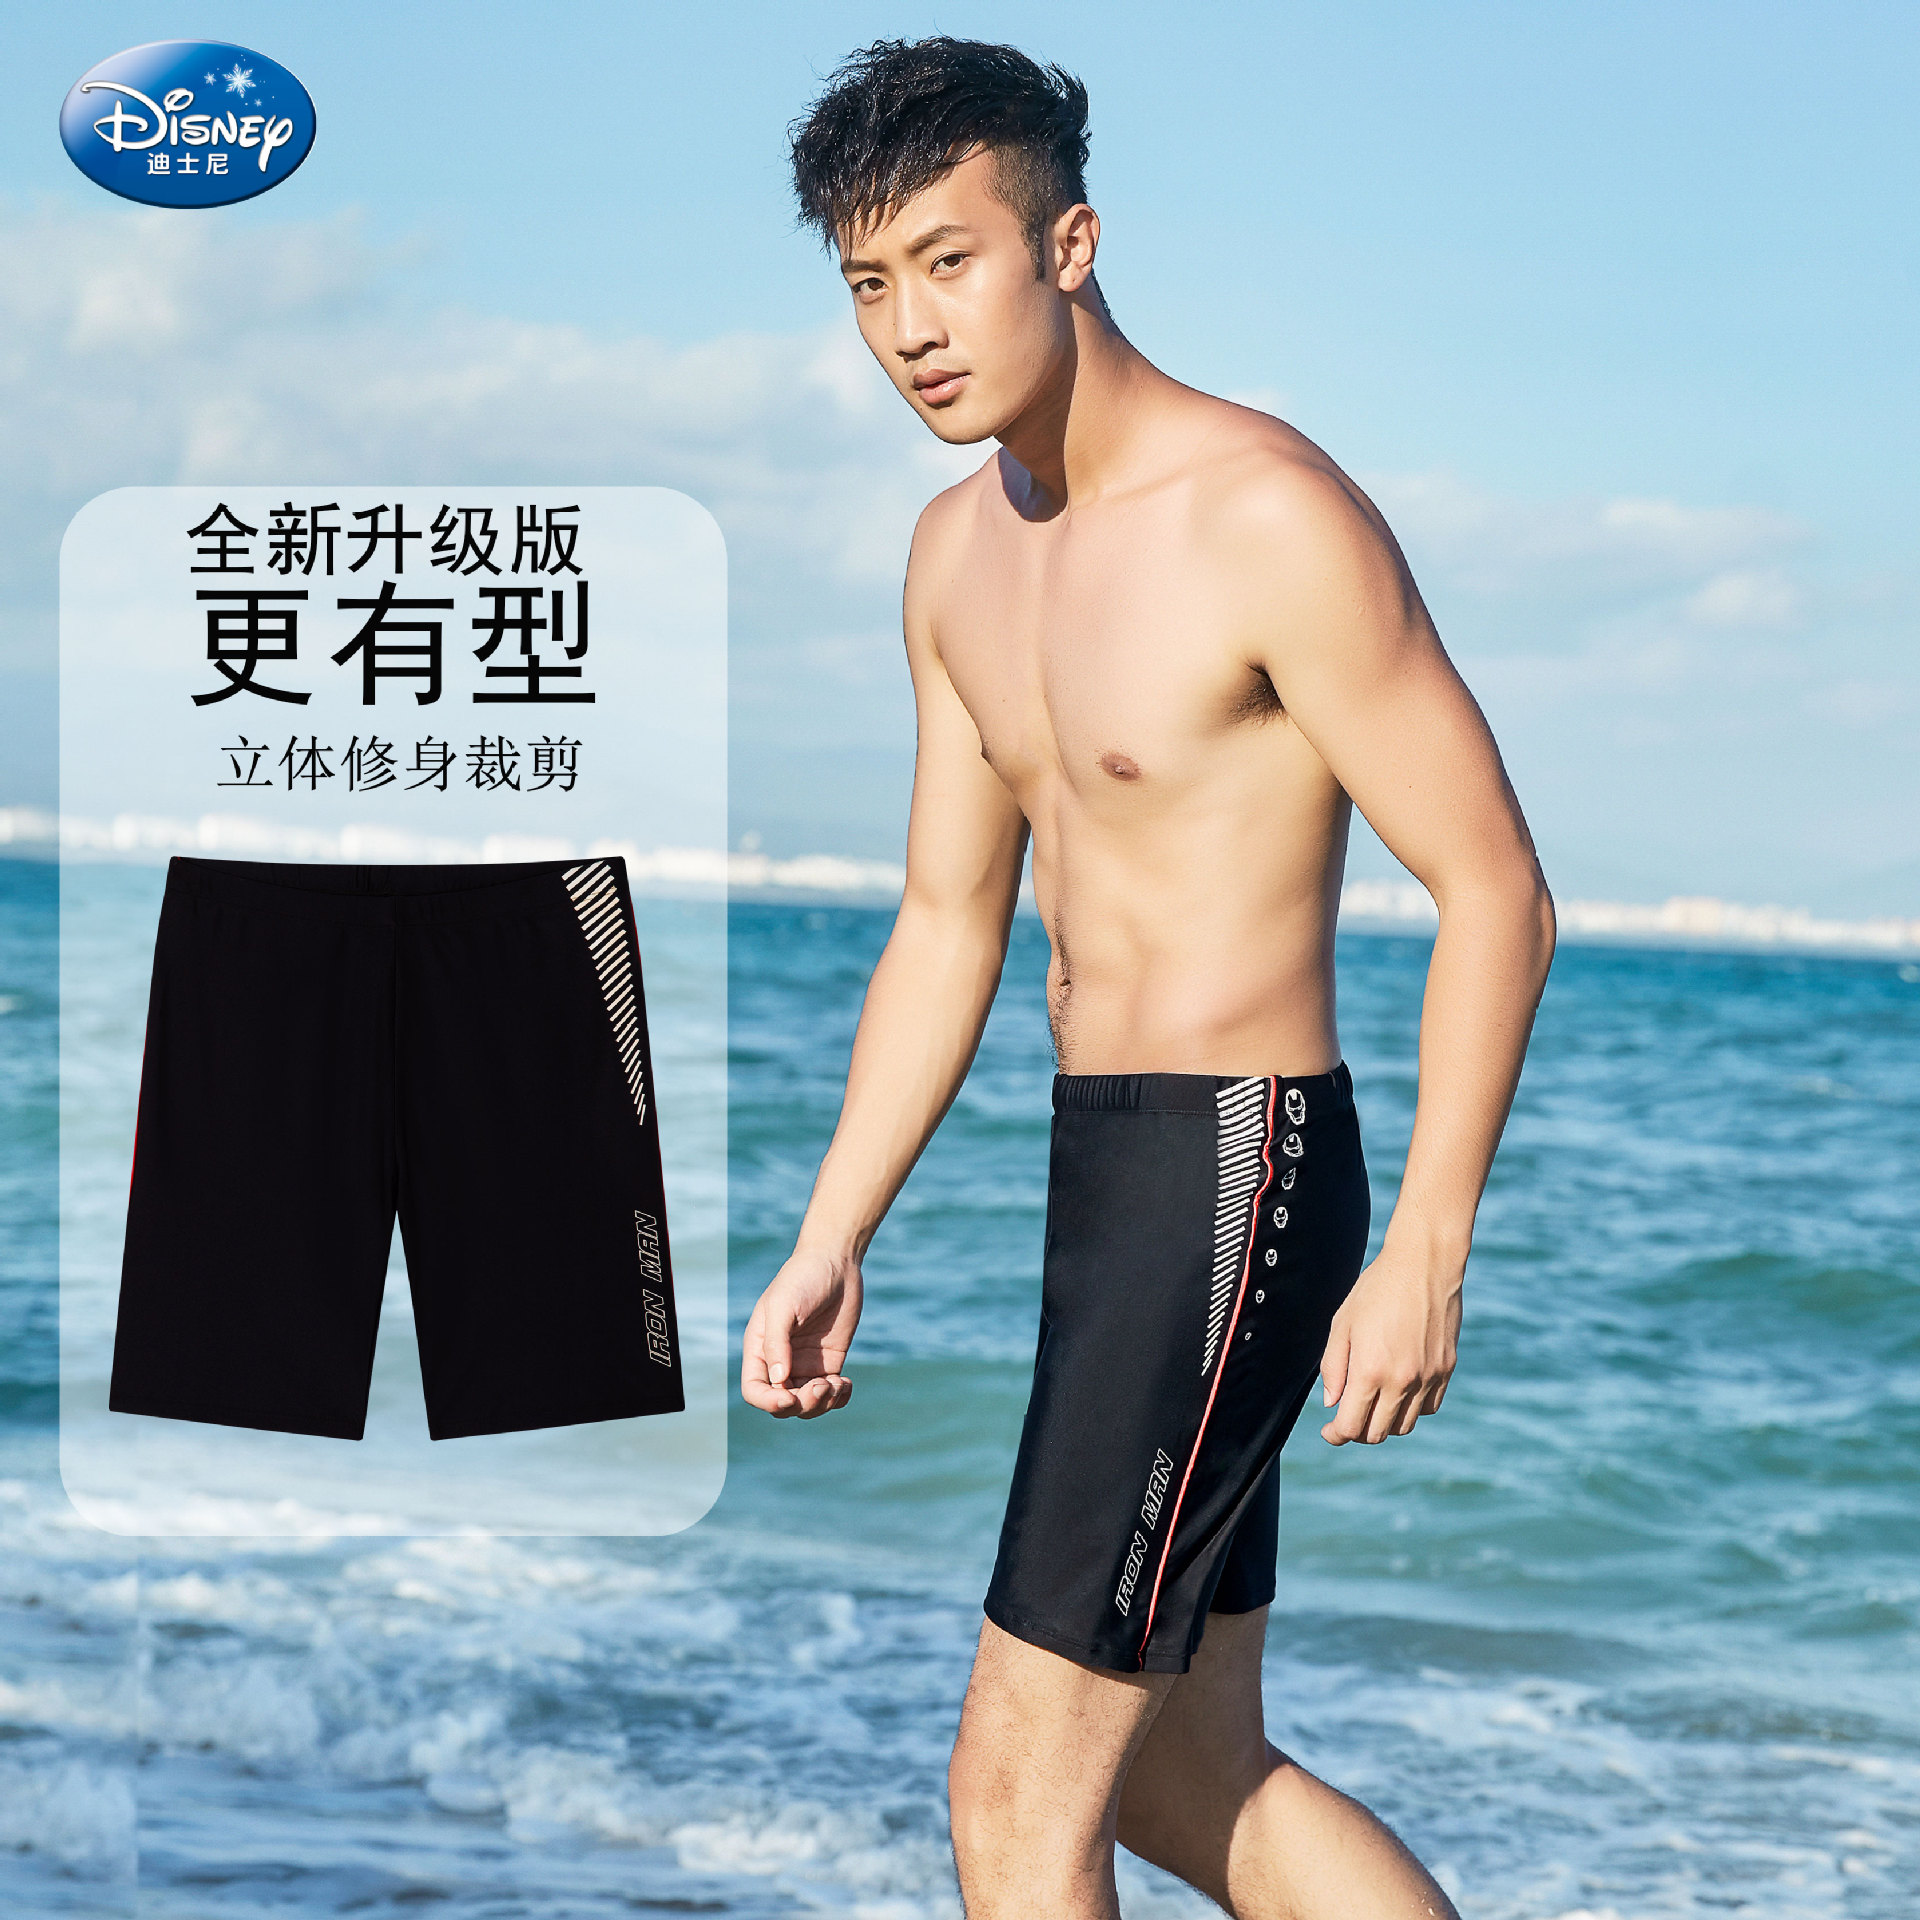 45-95kg Men s Swimsuits Disney Swim Pants Quick Drying Adult Hot Spring